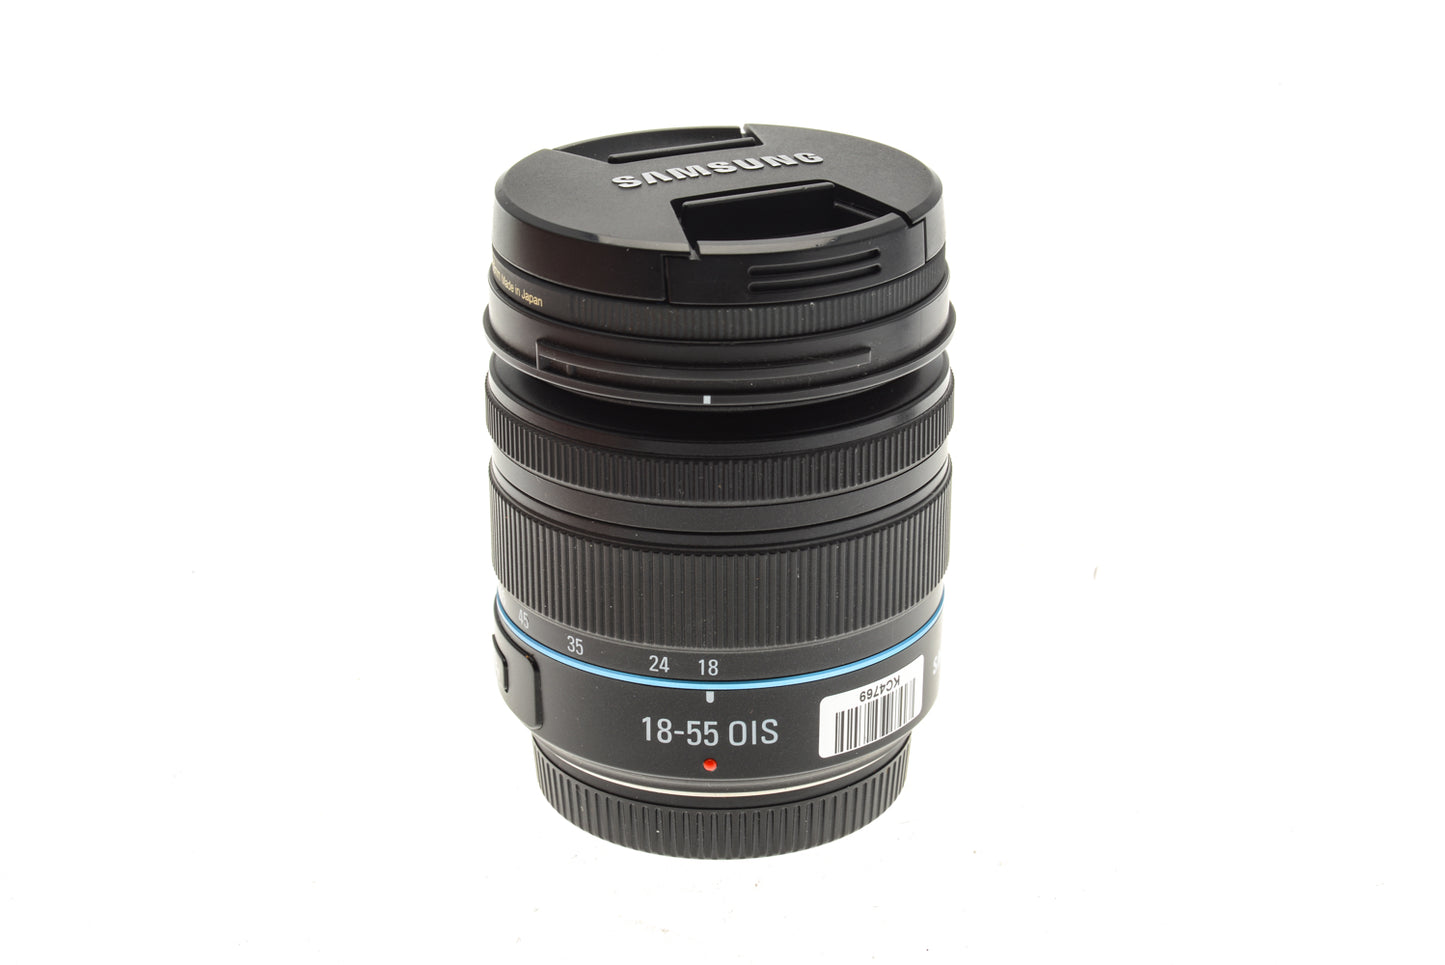 Samsung 18-55mm f3.5-5.6 II OIS i-Function - Lens